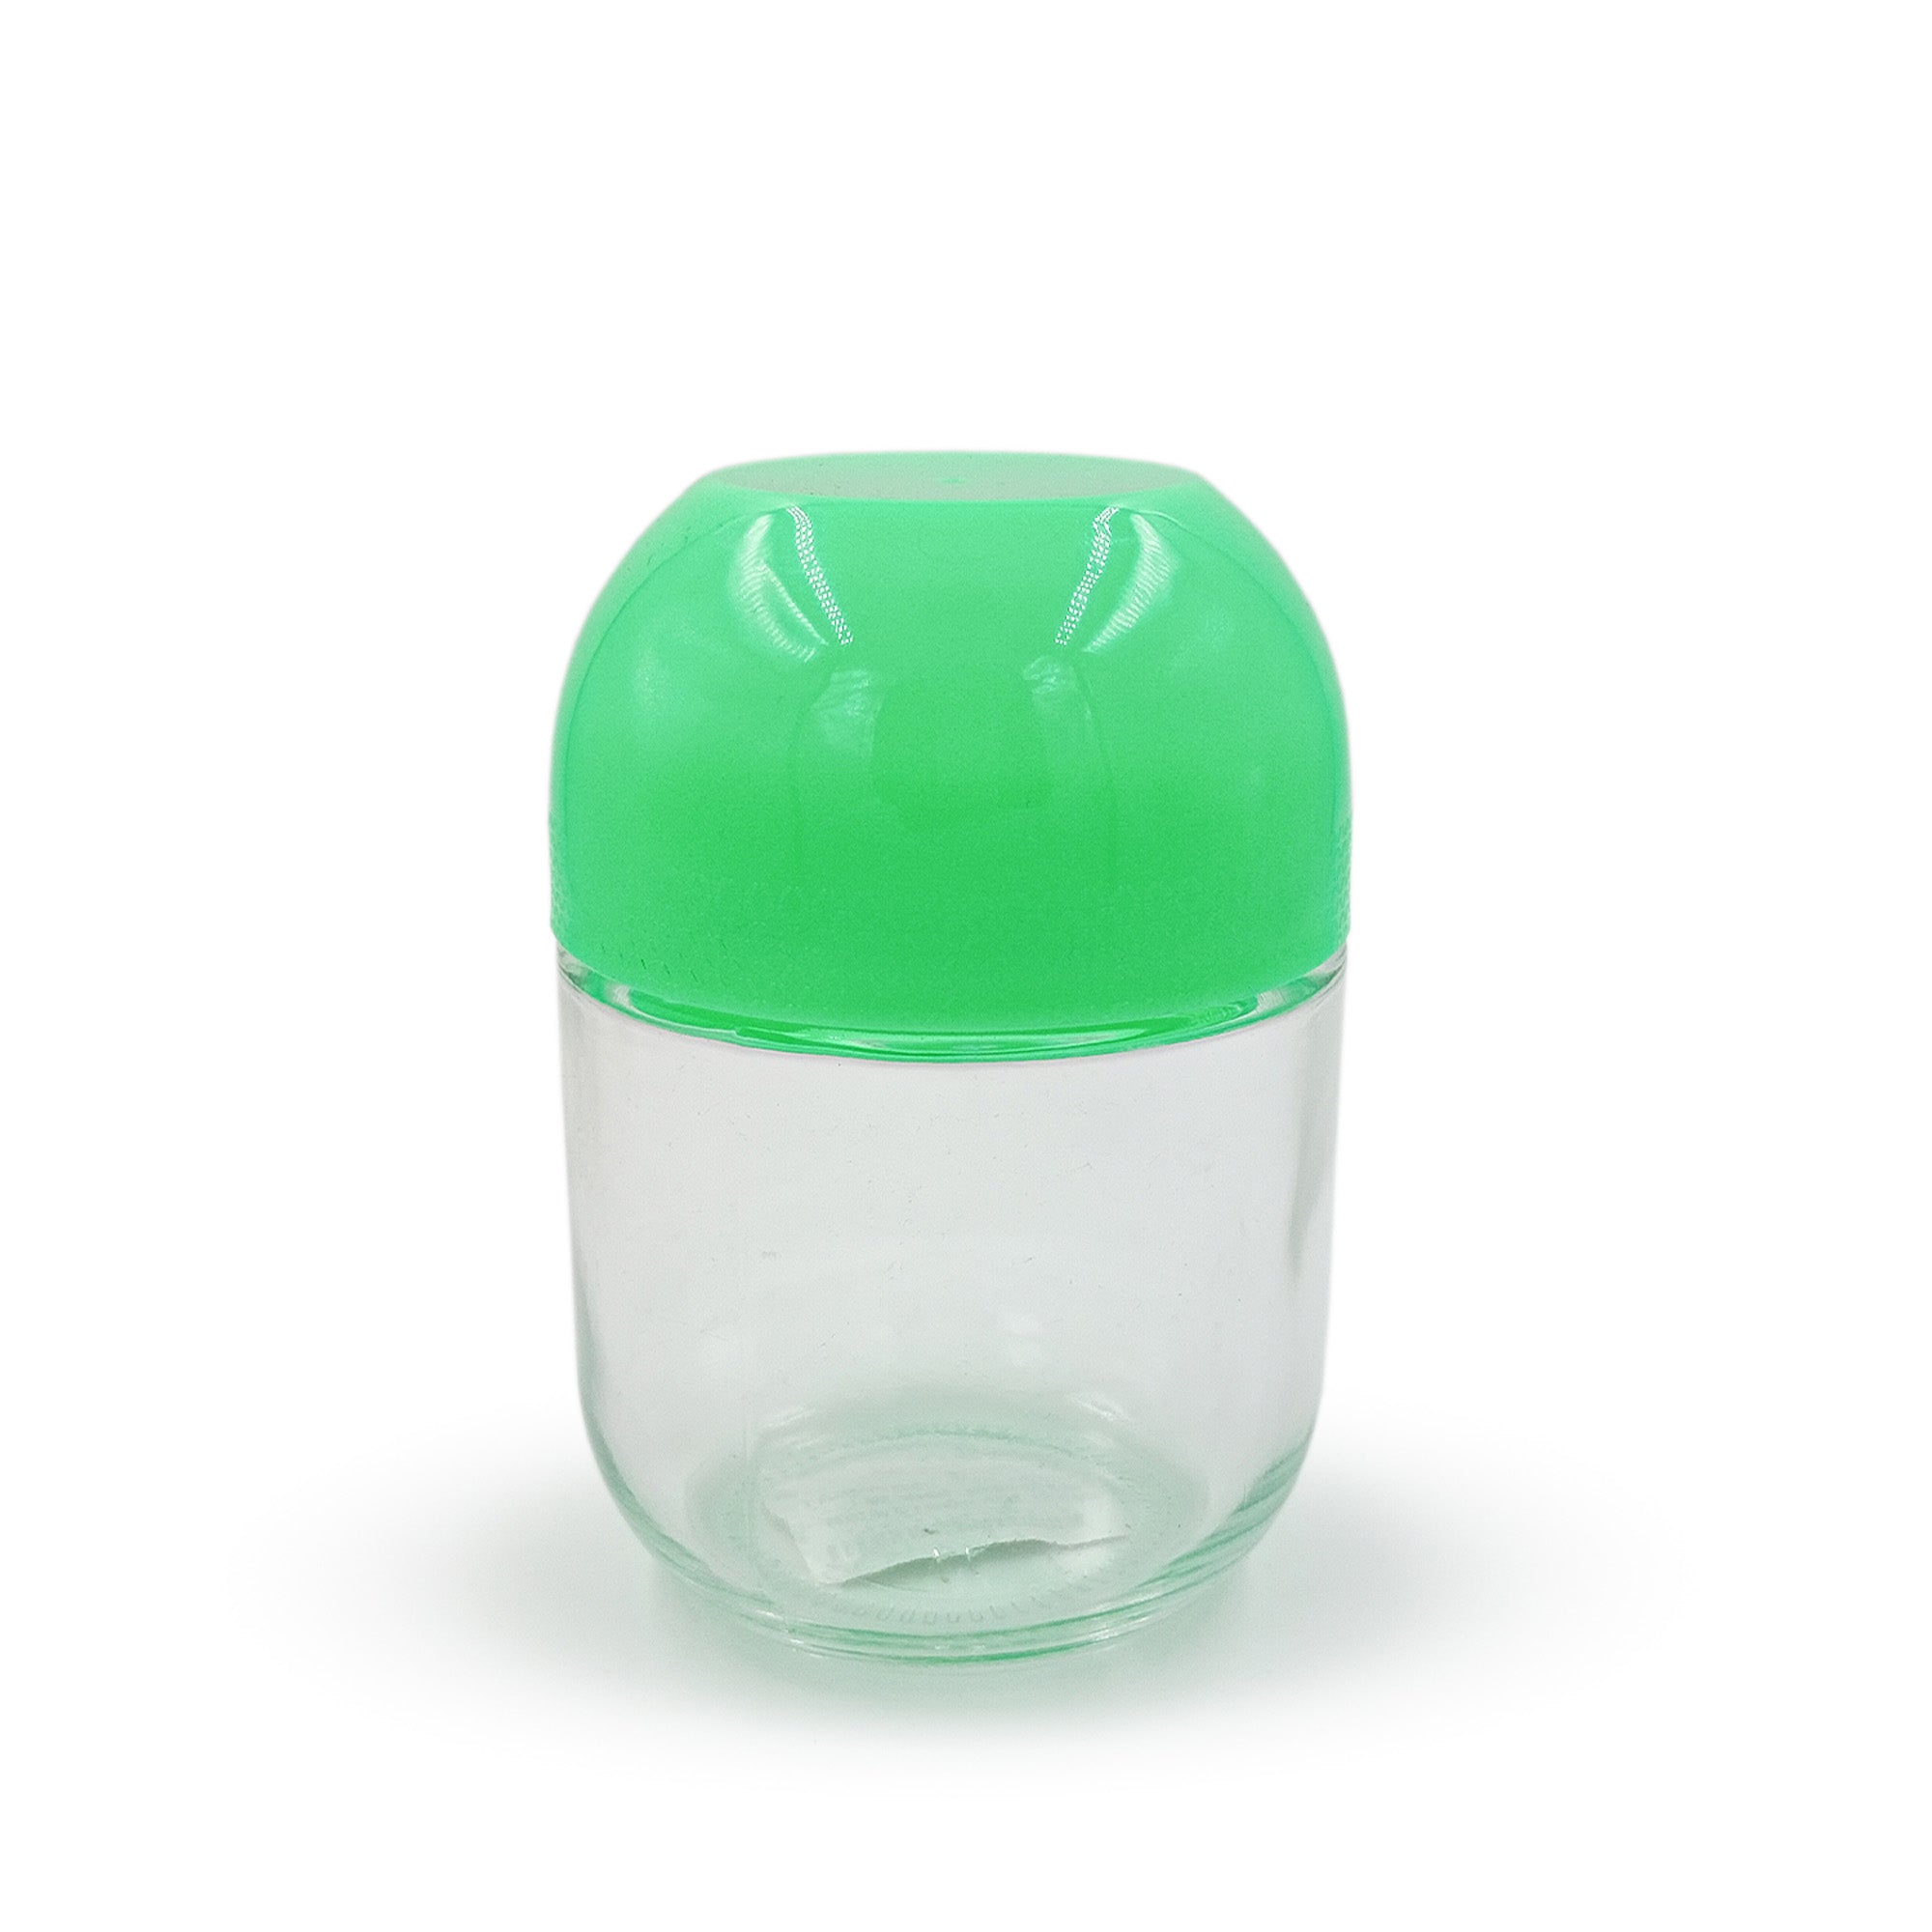 Red Butler Jars Glass Jars | 4pcs Set |350ml | Green & White QSGW35A4 Redbutler